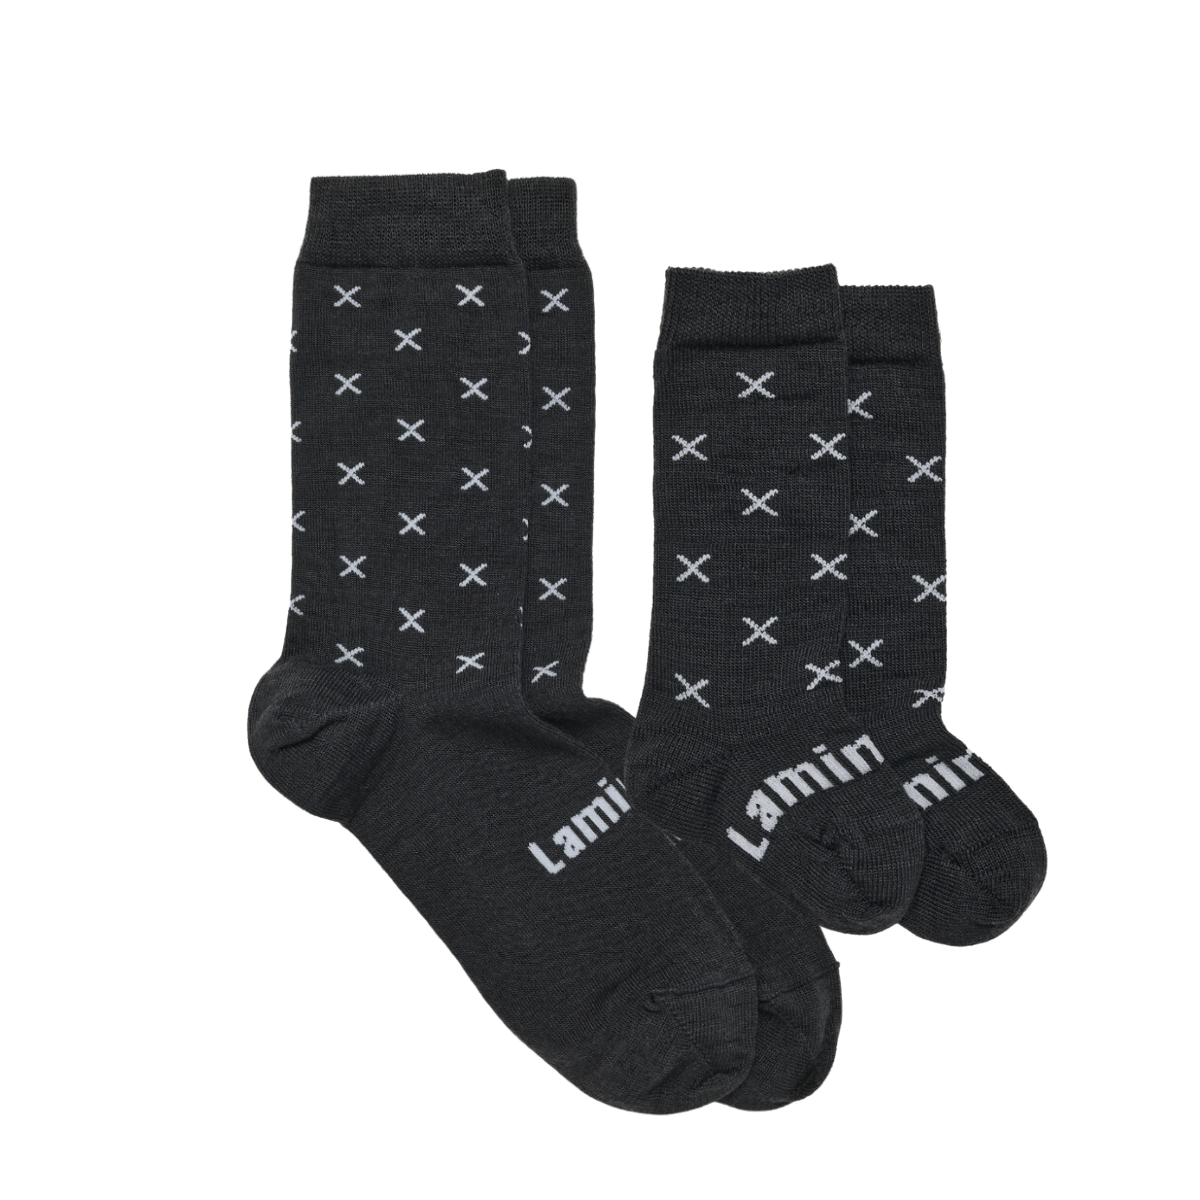 merino wool socks daddy and baby matching set